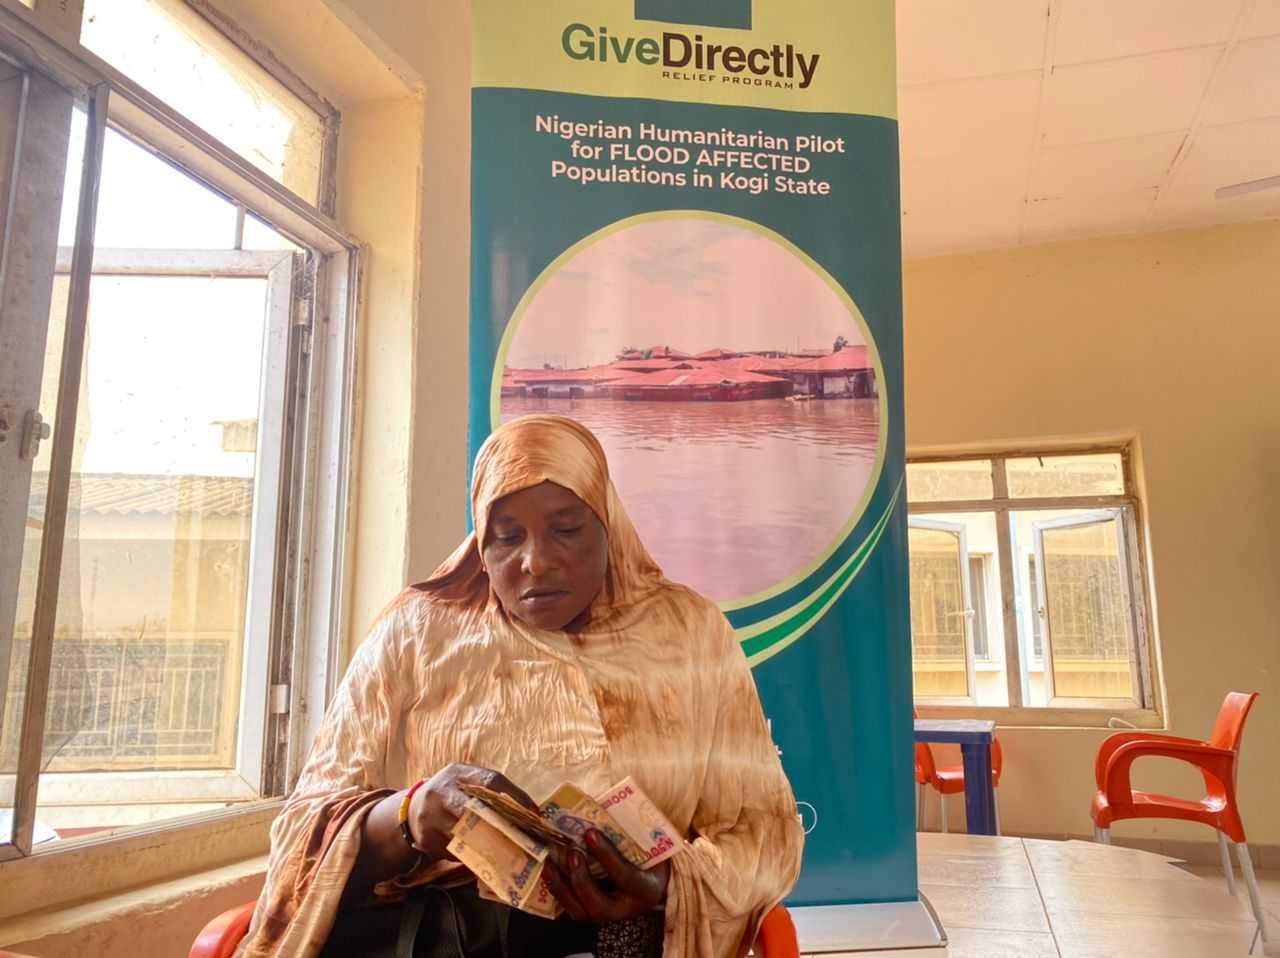 Hassana recieving a cash transfer in Kogi, Nigeria